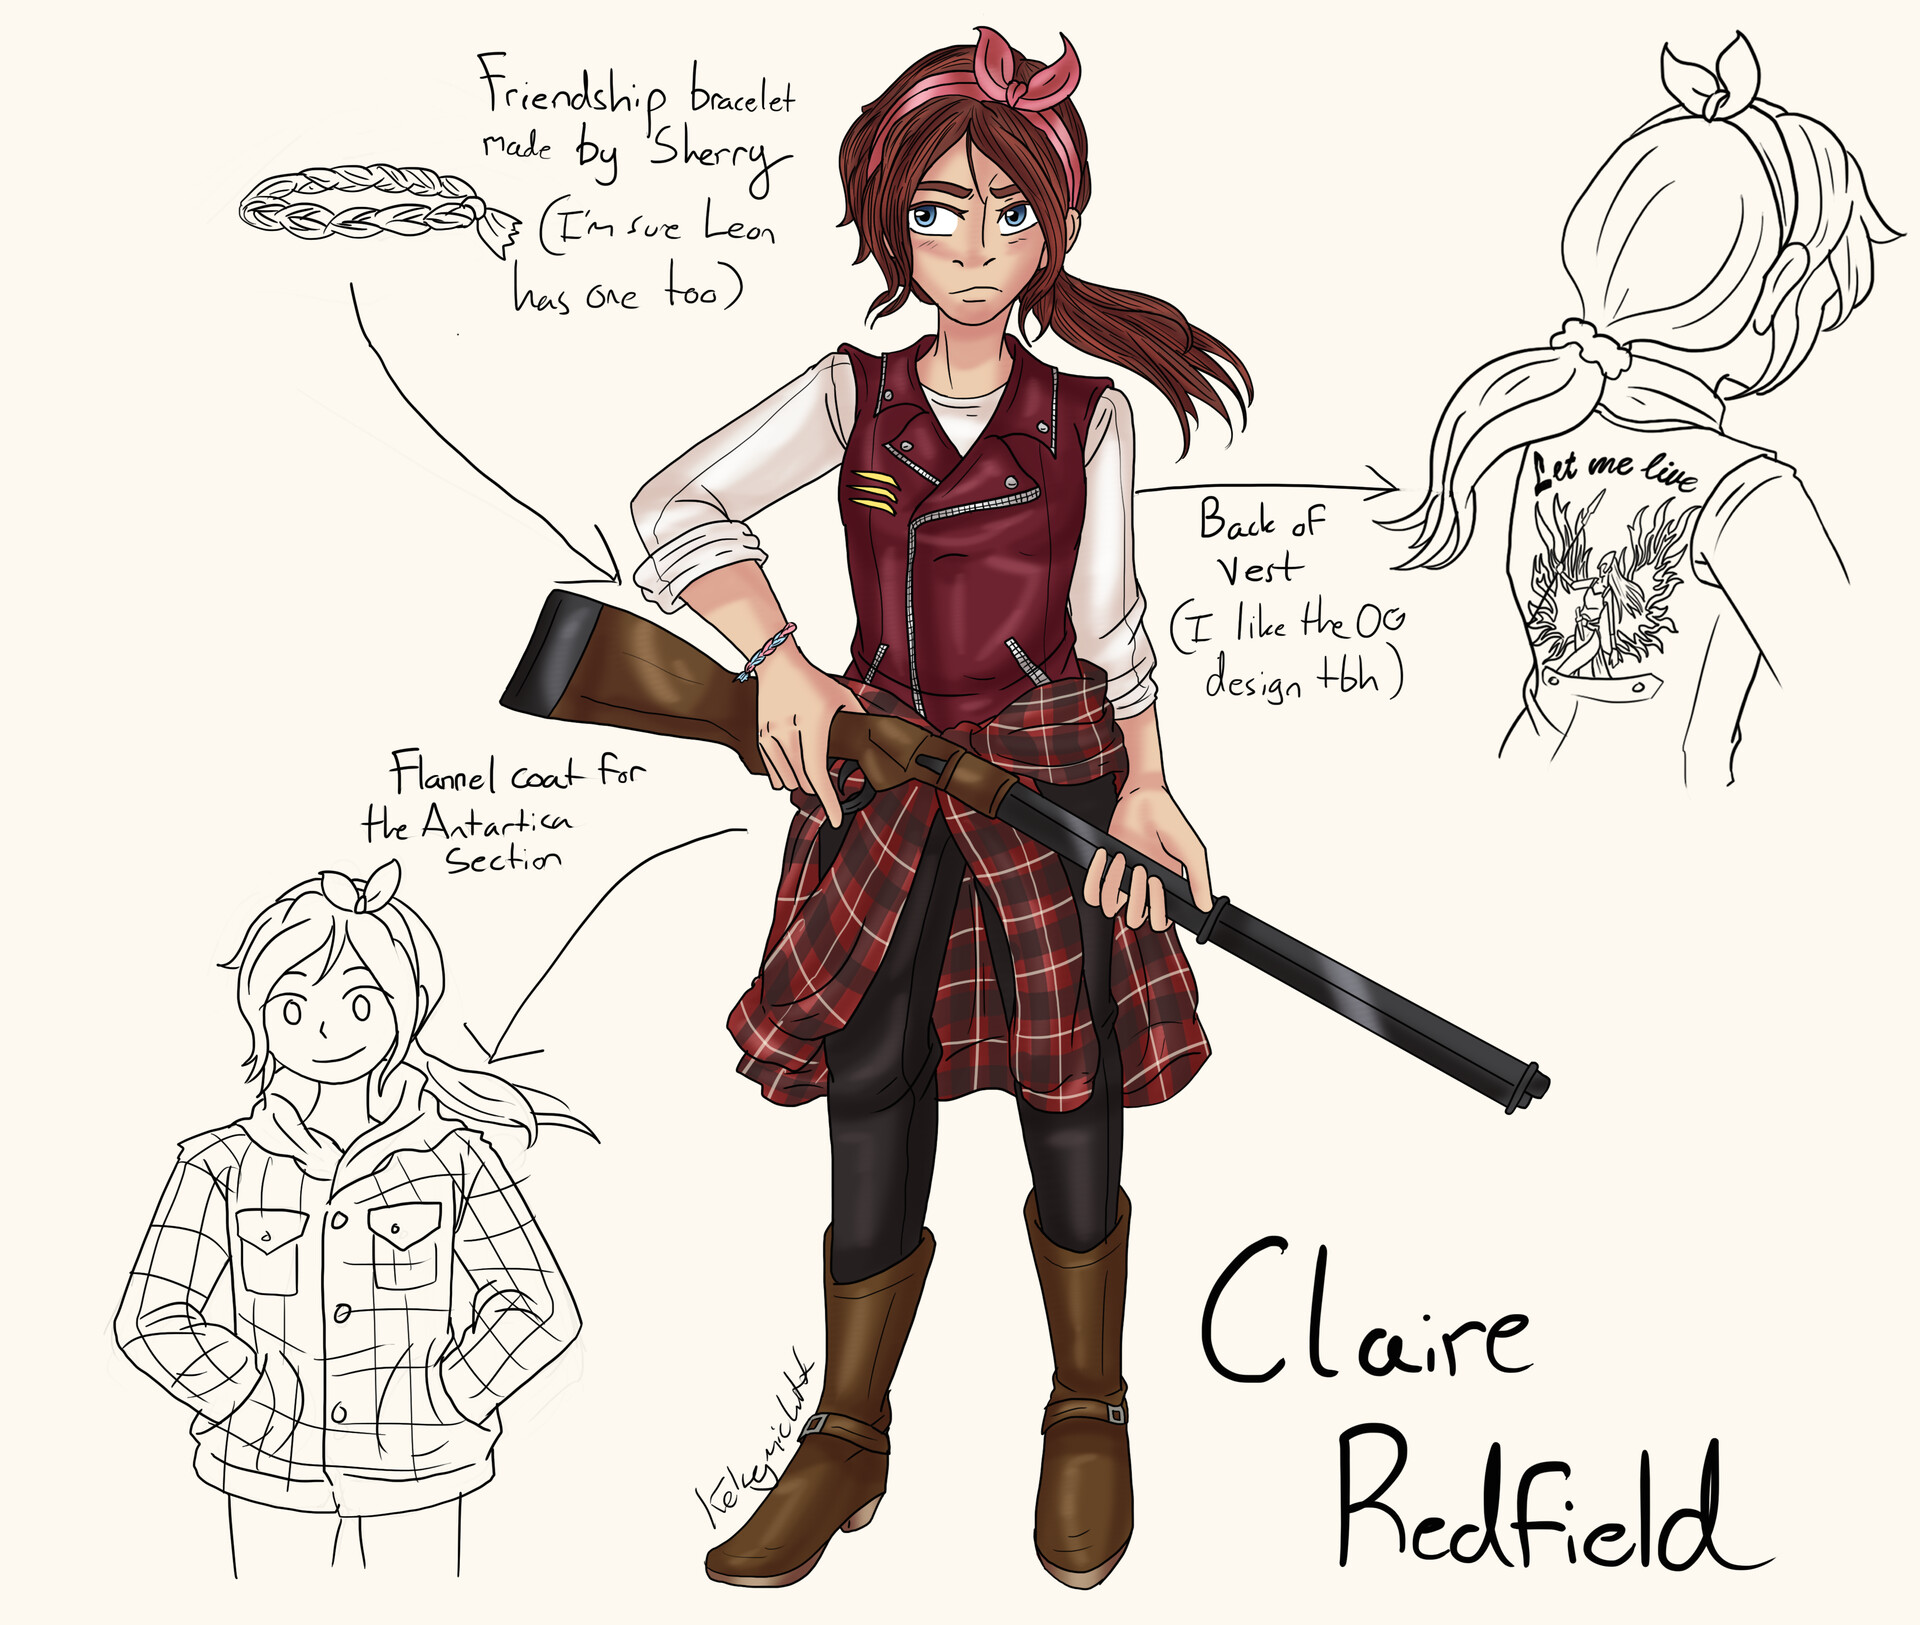 Fan-made Resident Evil Code Veronica Remake Concept Art Looks